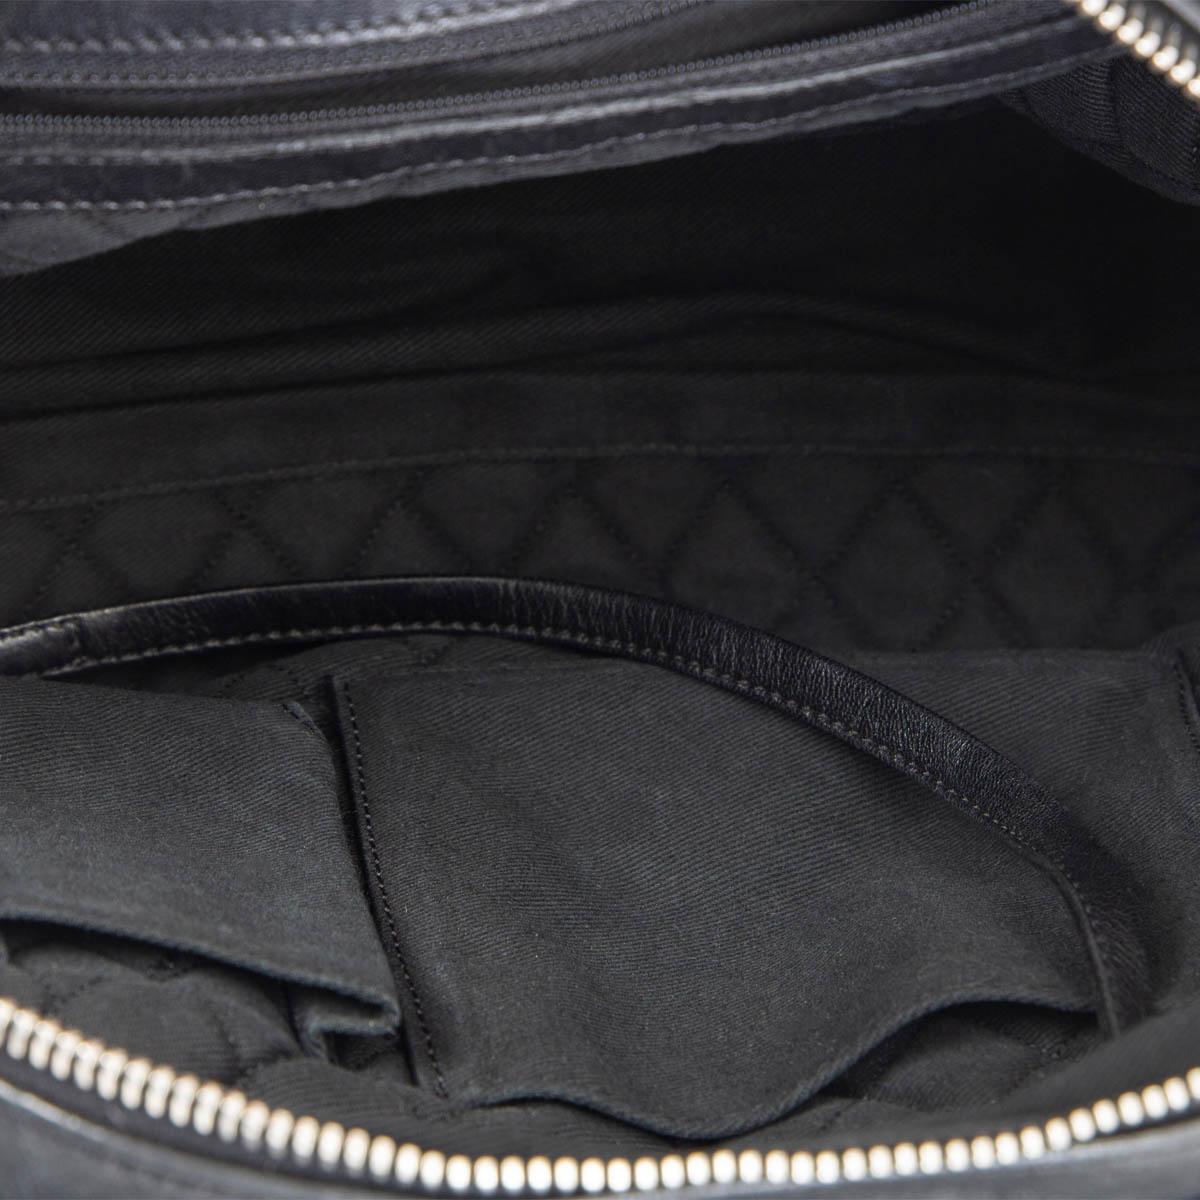 CHANEL black leather SOFT BOWLING Bag 1